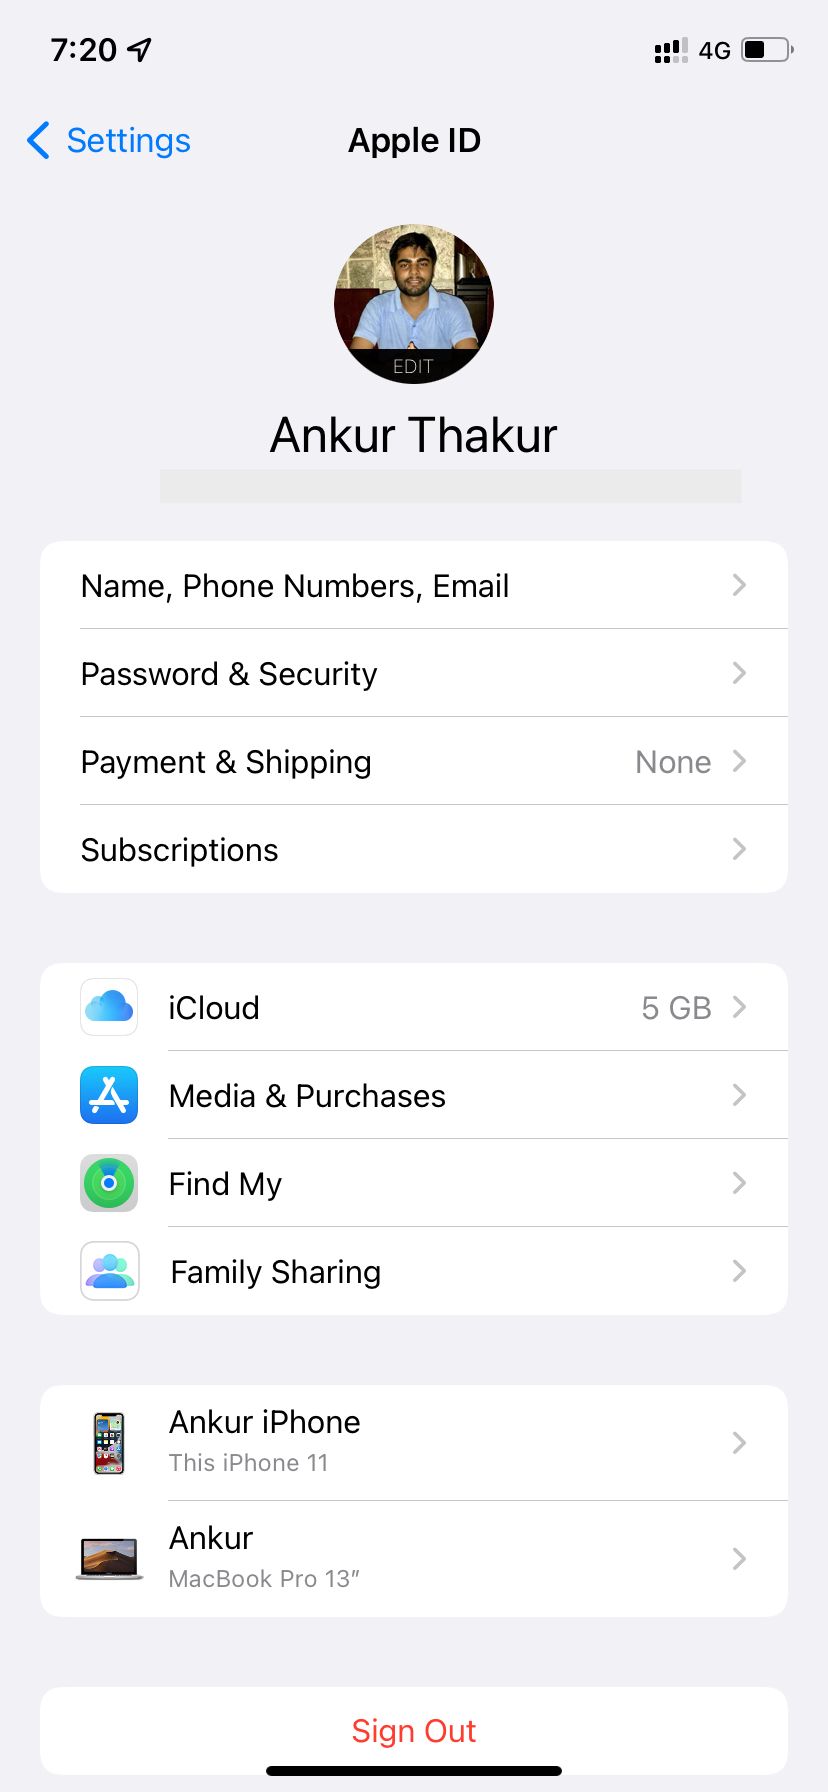 iPhone Apple ID settings showing iCloud